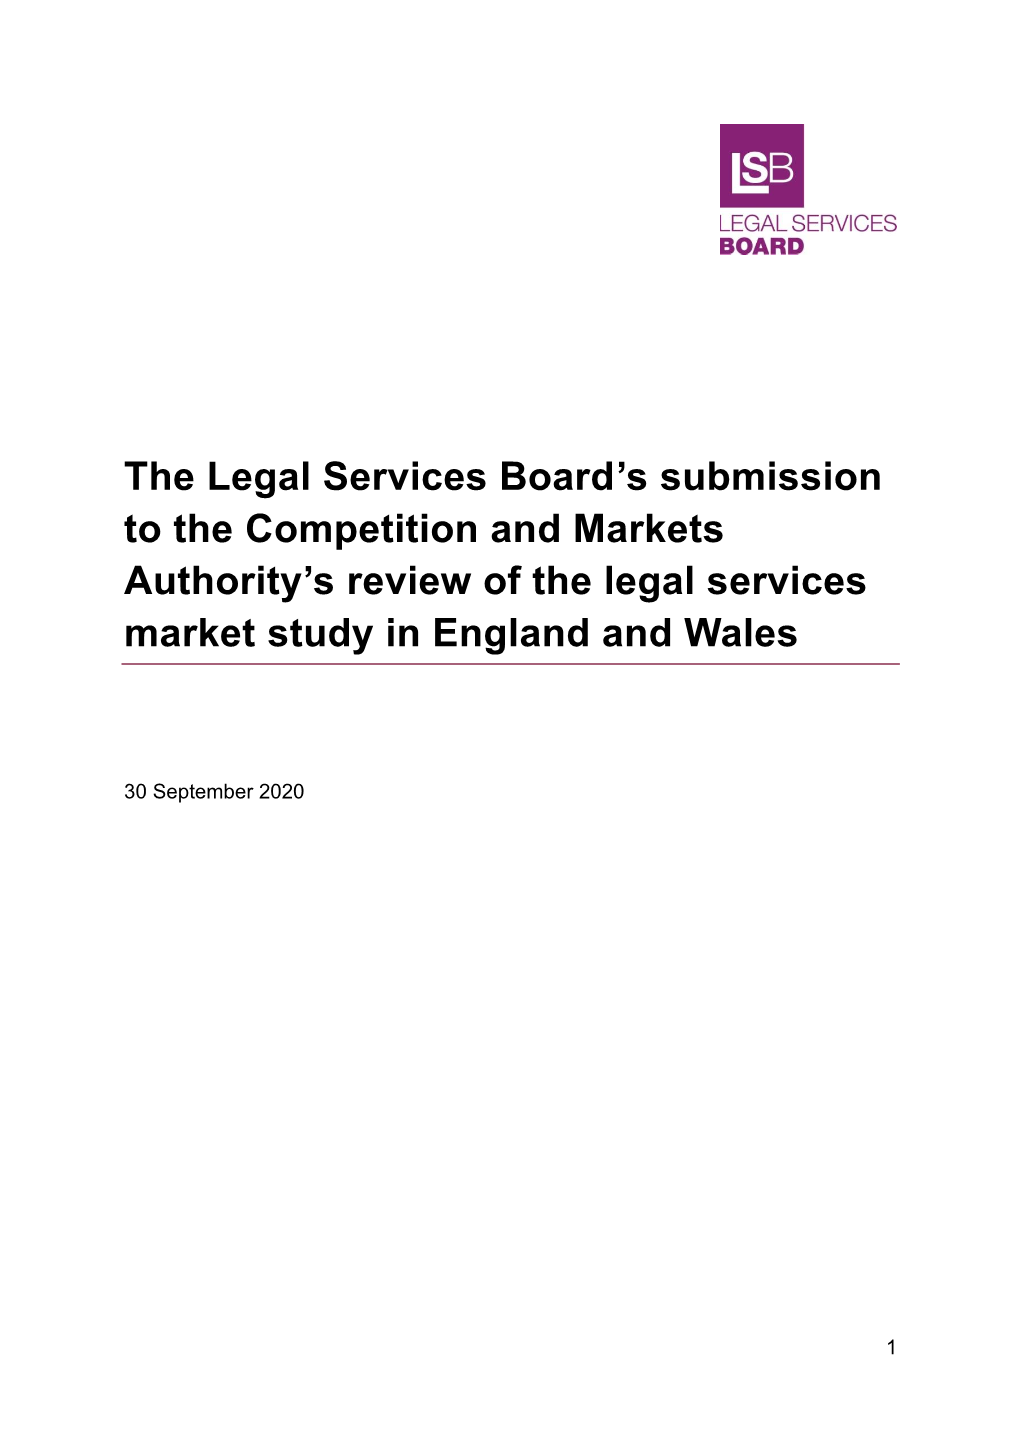 Legal Services Board's